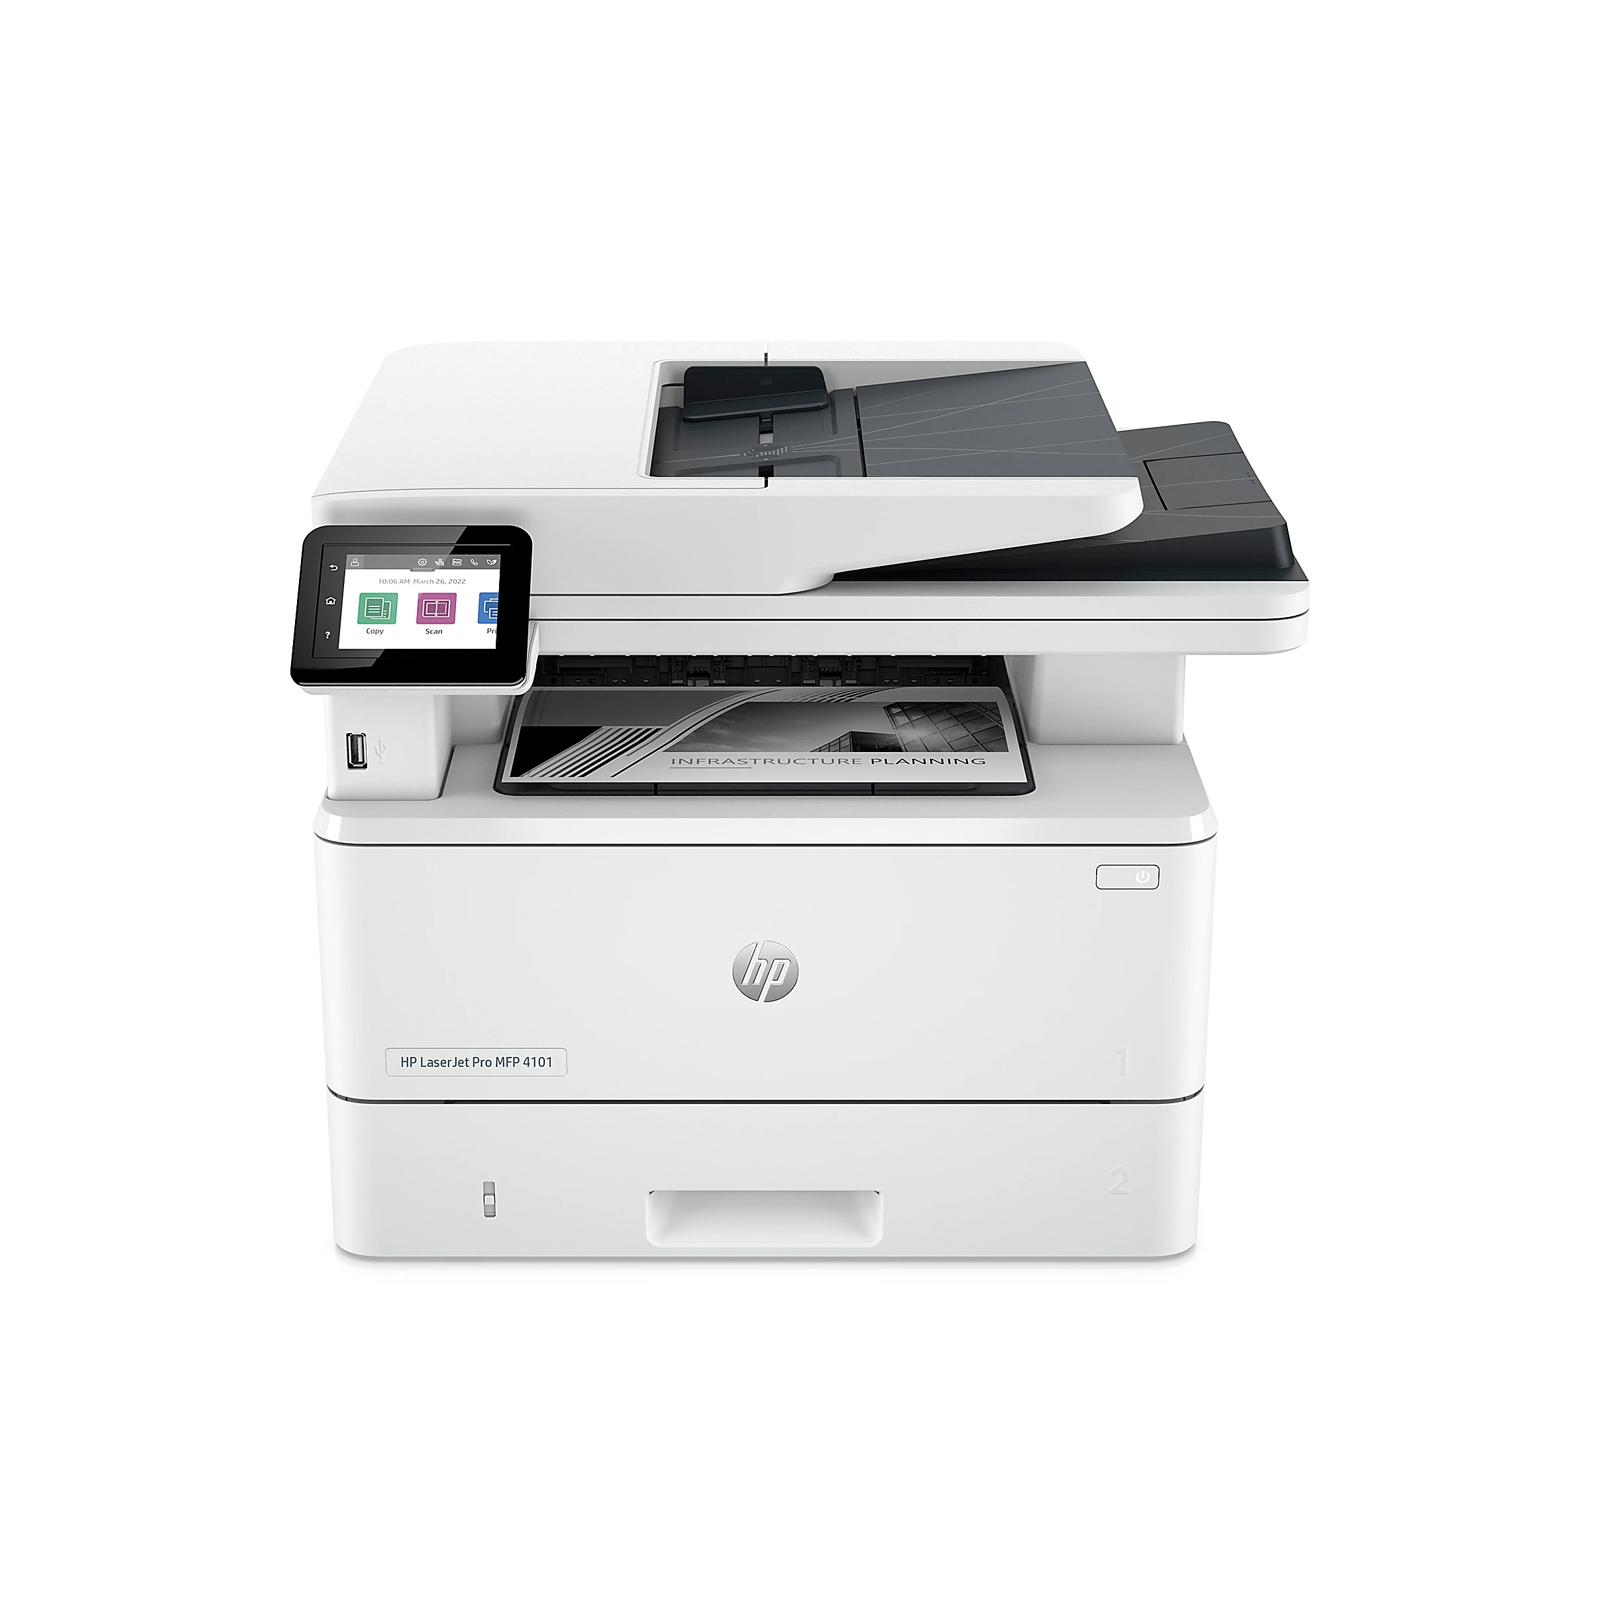 RefurbishedHP LaserJet Pro MFP 4101fdn Laser All-in-One Monochrome Printer